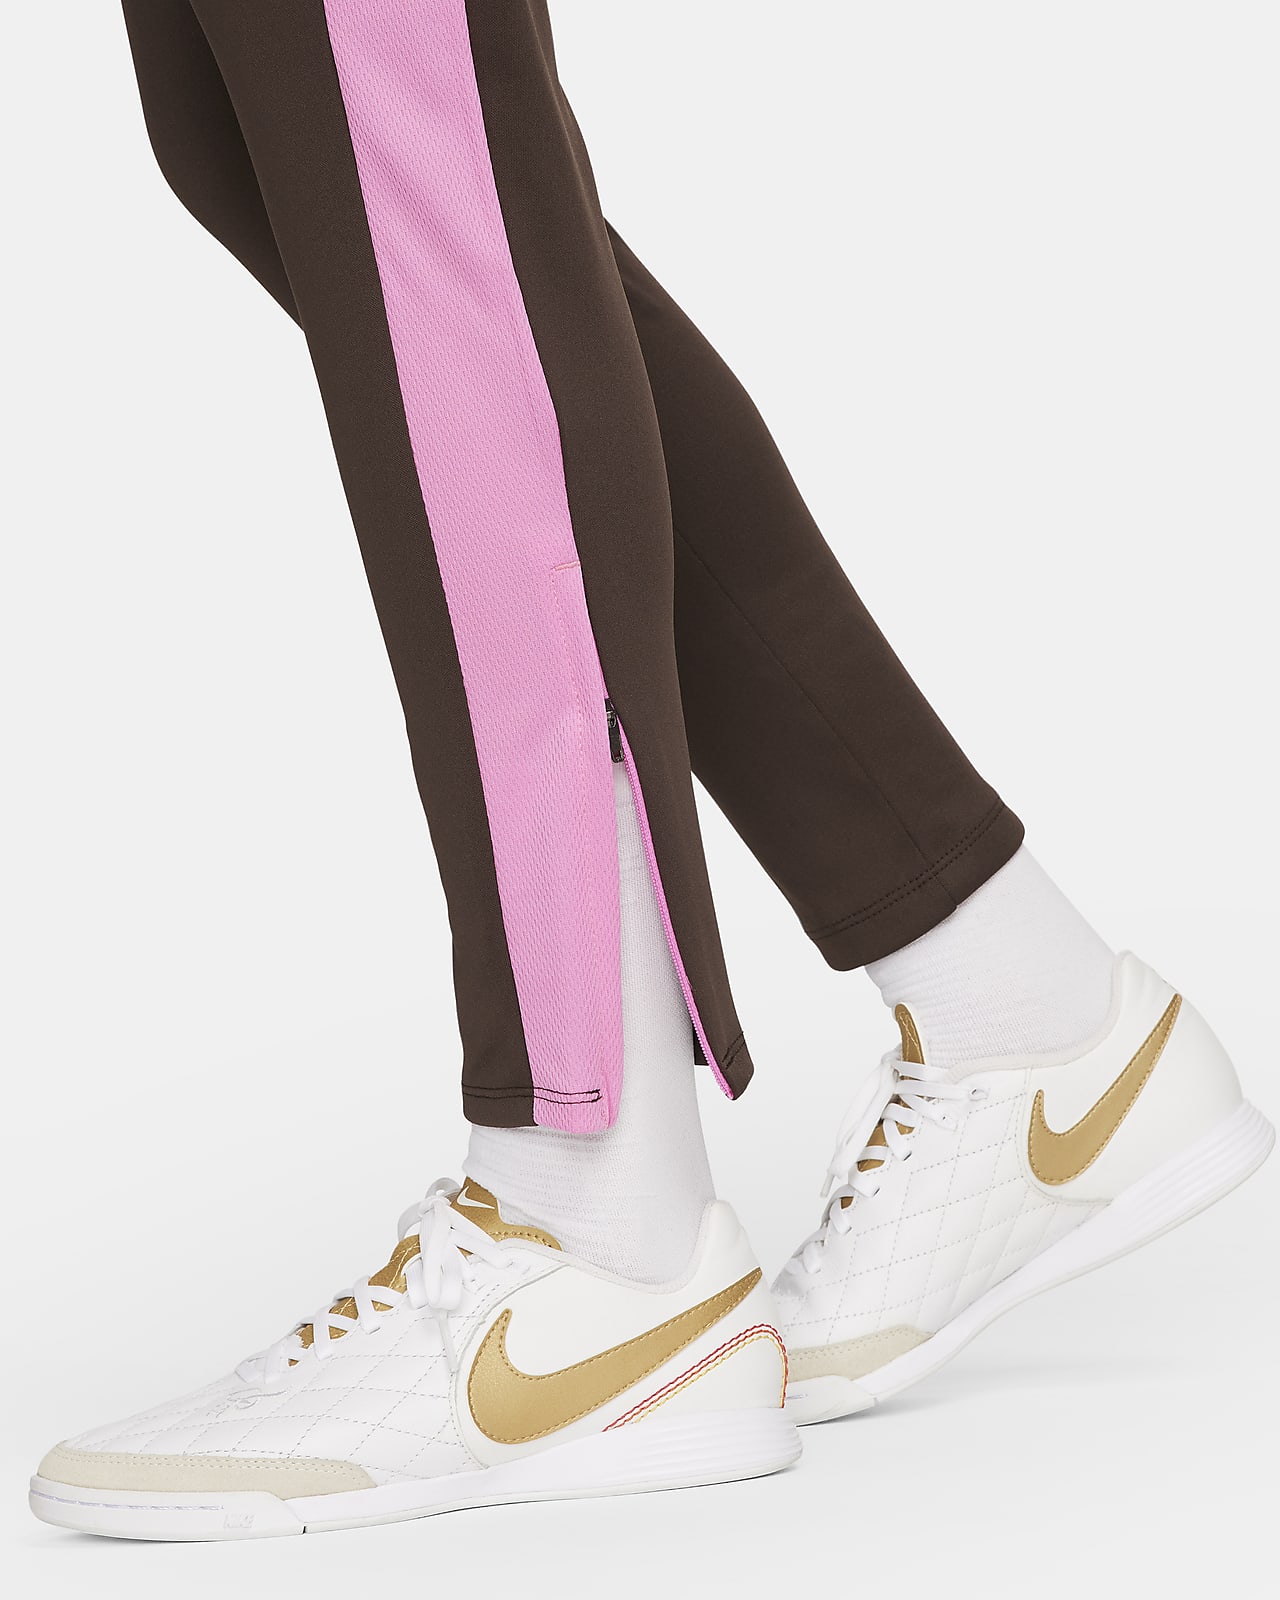 Nike Women's Dri-FIT Academy​ Soccer Pants - Hibbett